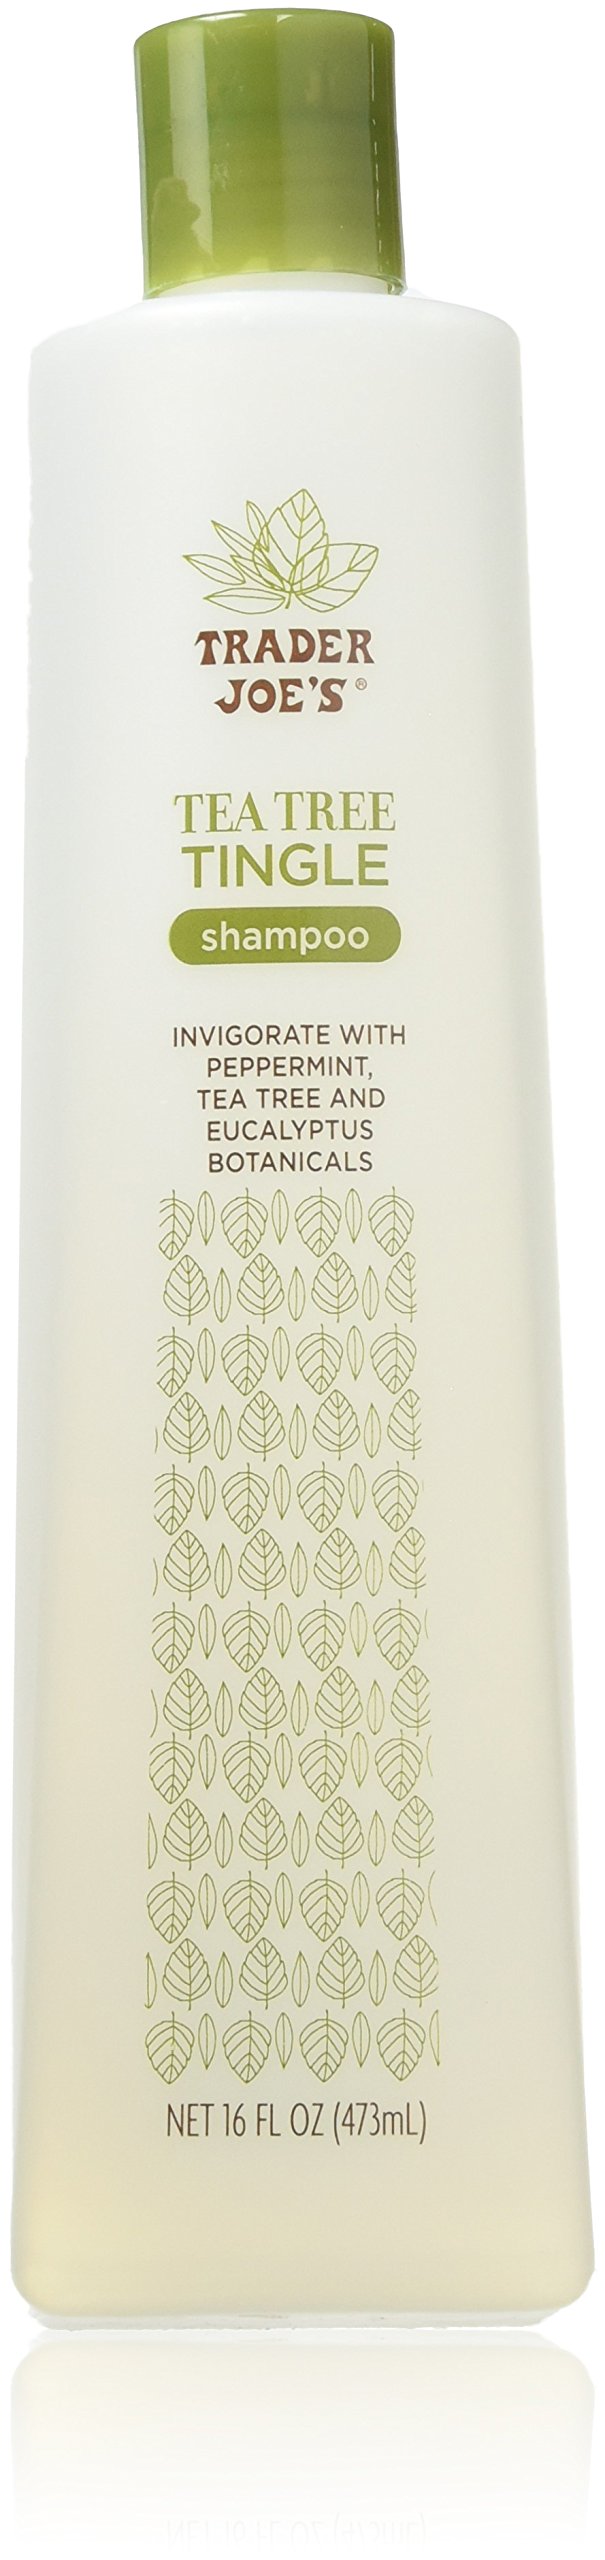 Trader Joe's Tea Tree Tingle Shampoo with Peppermint, Tea Tree and Eucalyptus Botanicals, 16-Ounces